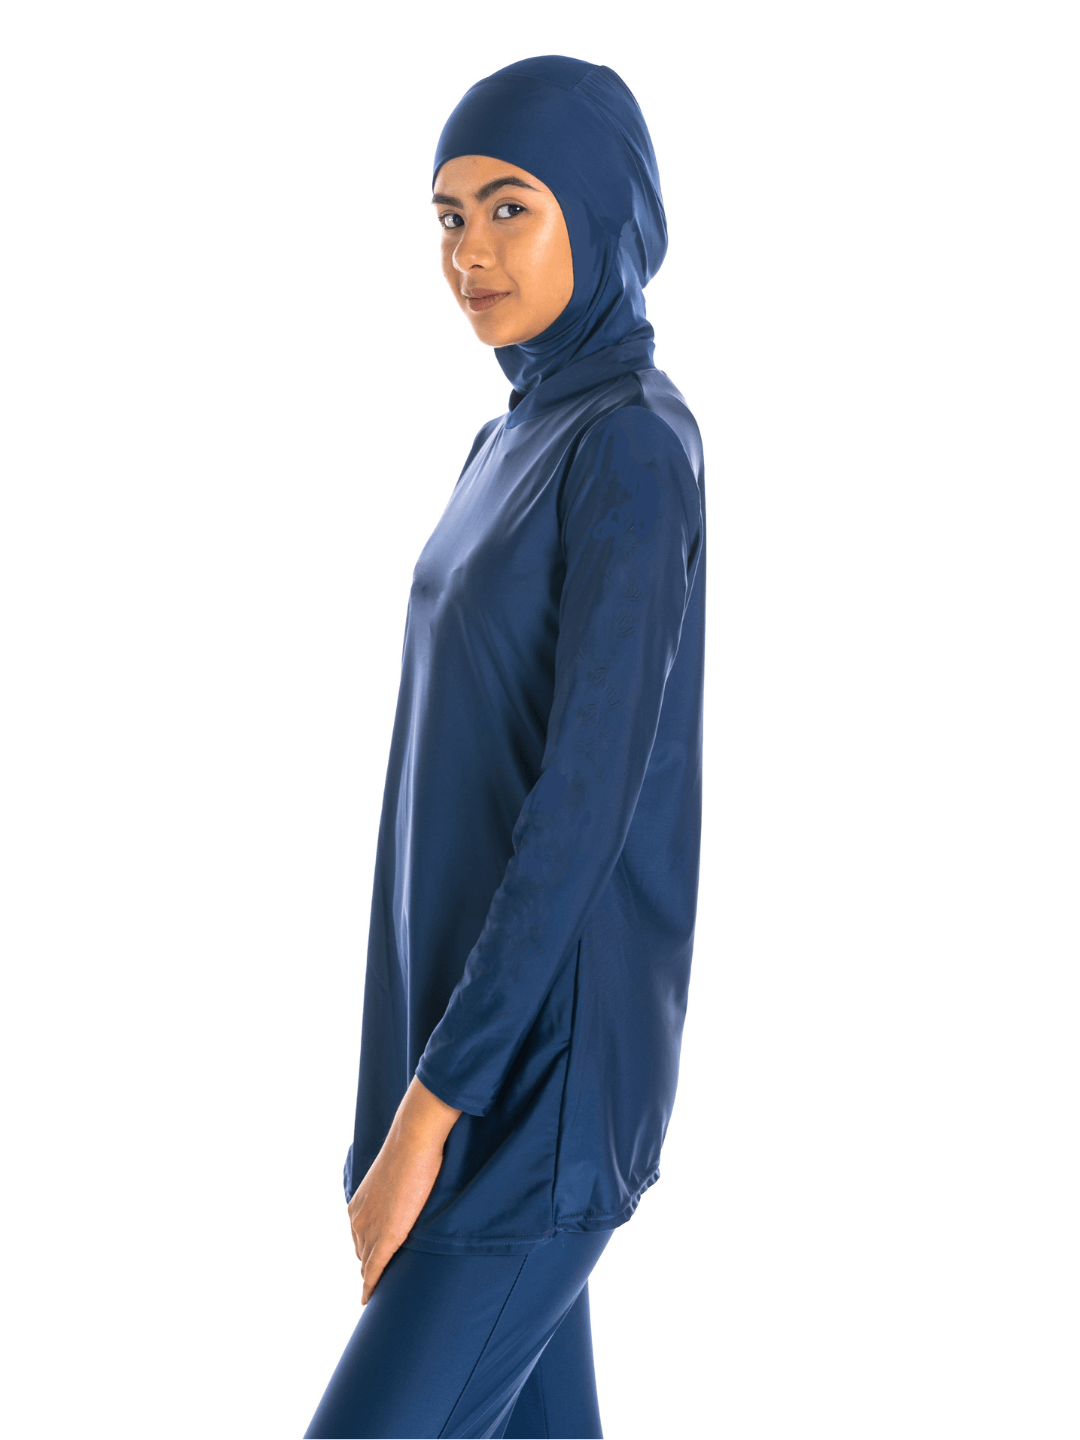 Modernly Modest Melur Muslimah Swimwear Set Navy Blue (Plus Size Available) - Pink N' Proper